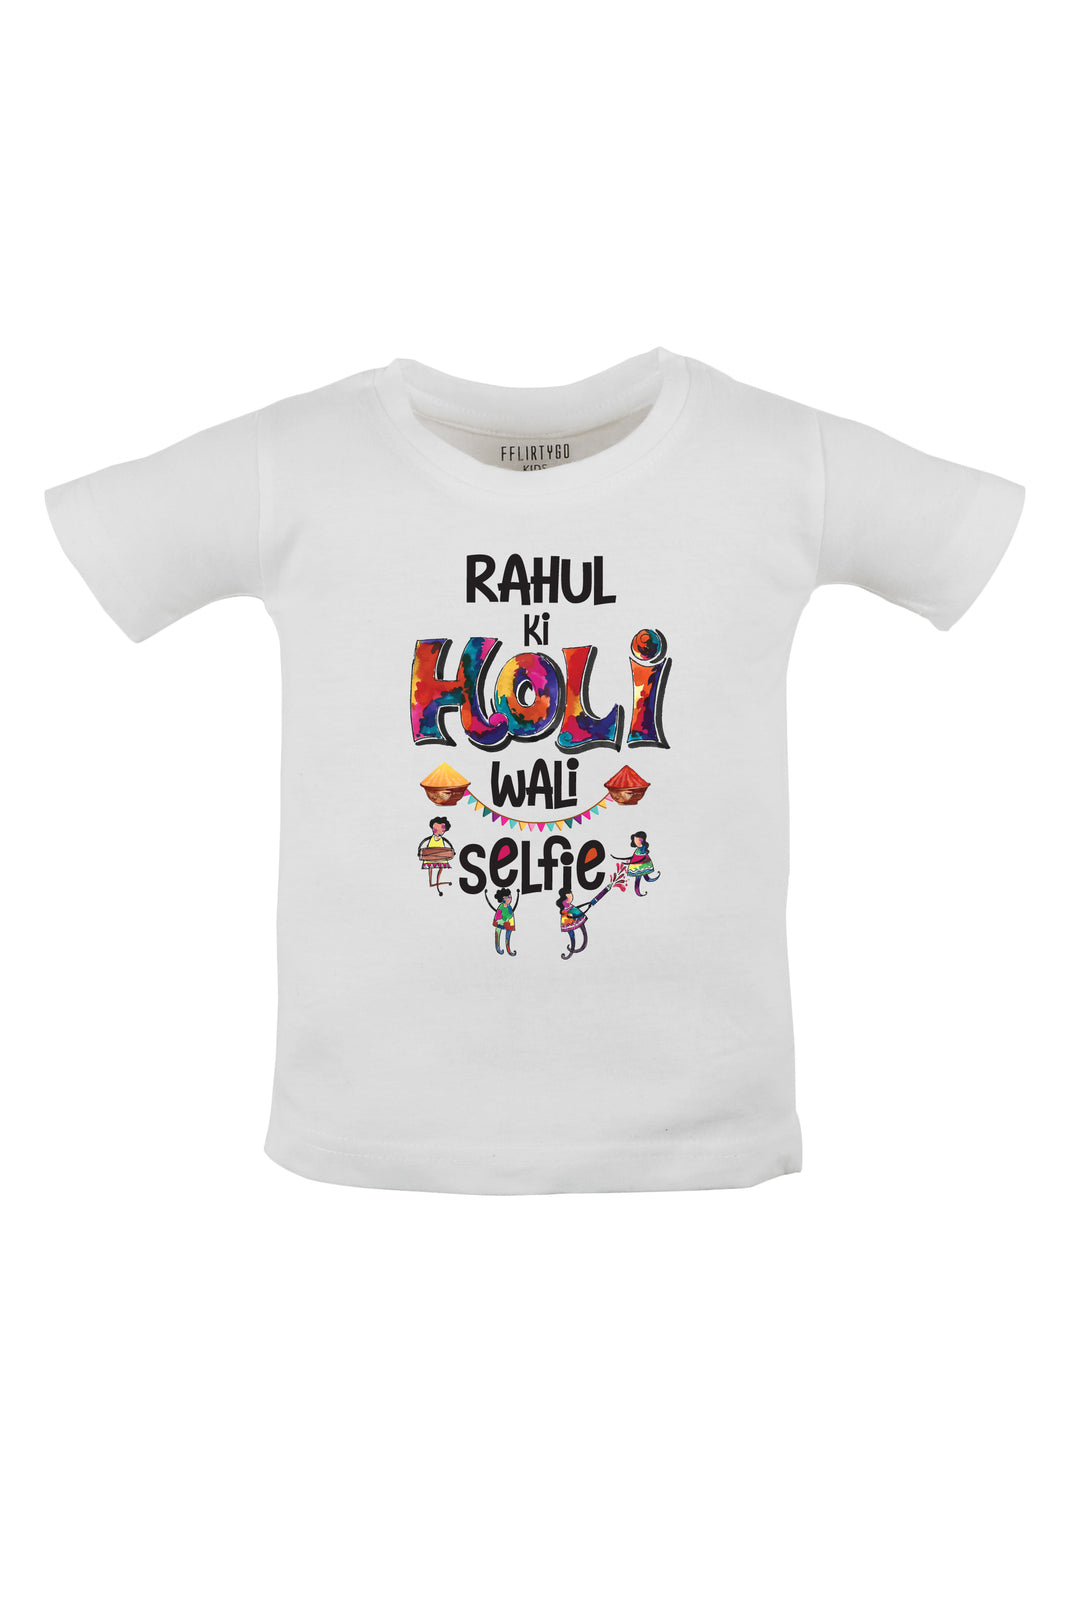 Holi Wali Selfie Kids T Shirt w/ Custom Name